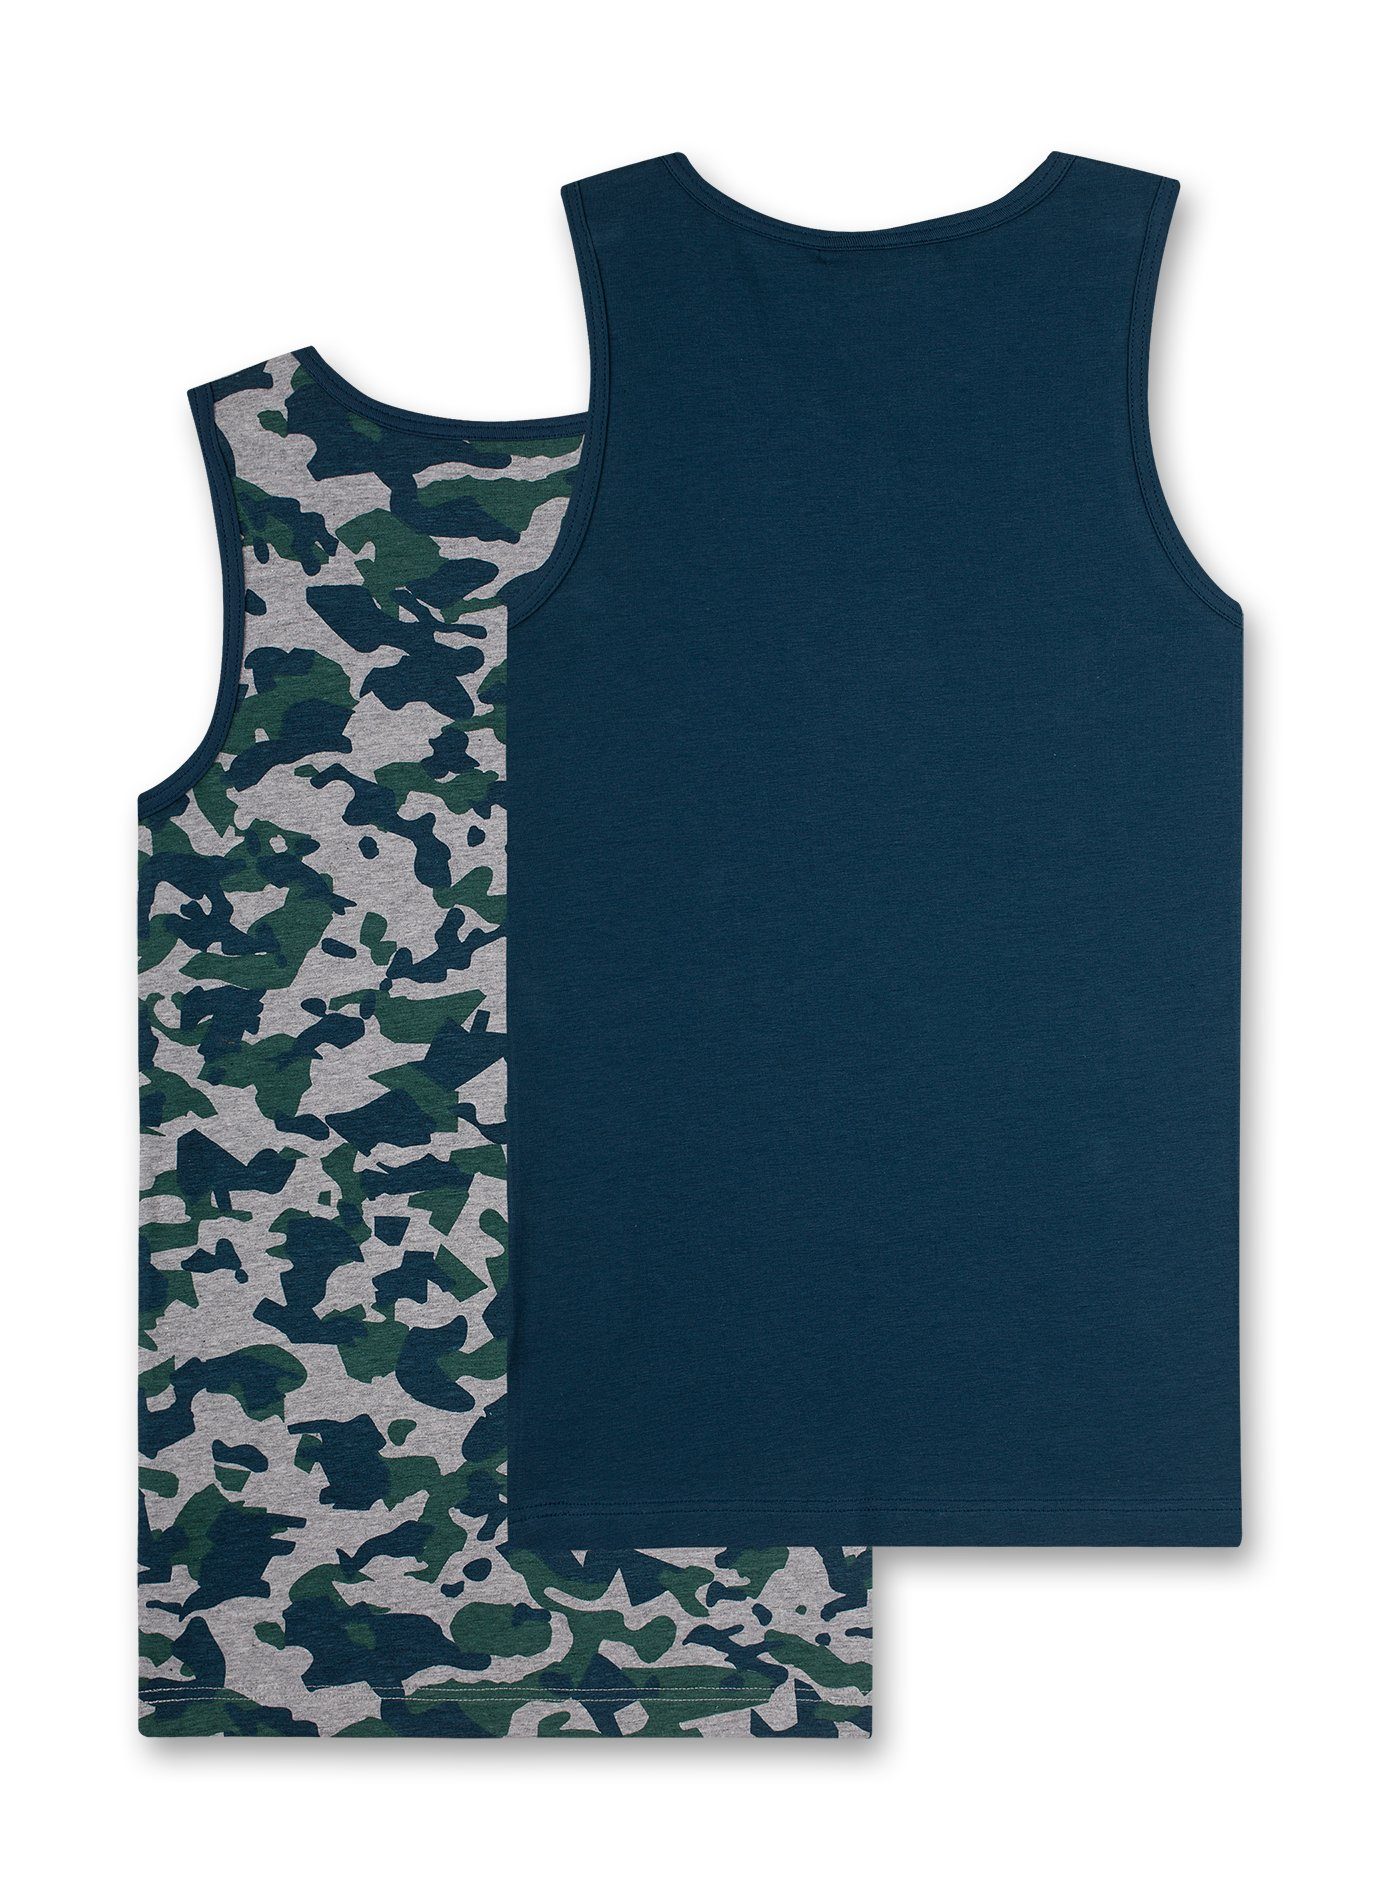 s.Oliver Junior Unterhemd s.Oliver Jungen 2er Pack Unterhemd Hemd camouflage blau grün (Doppelpack, 2-St)